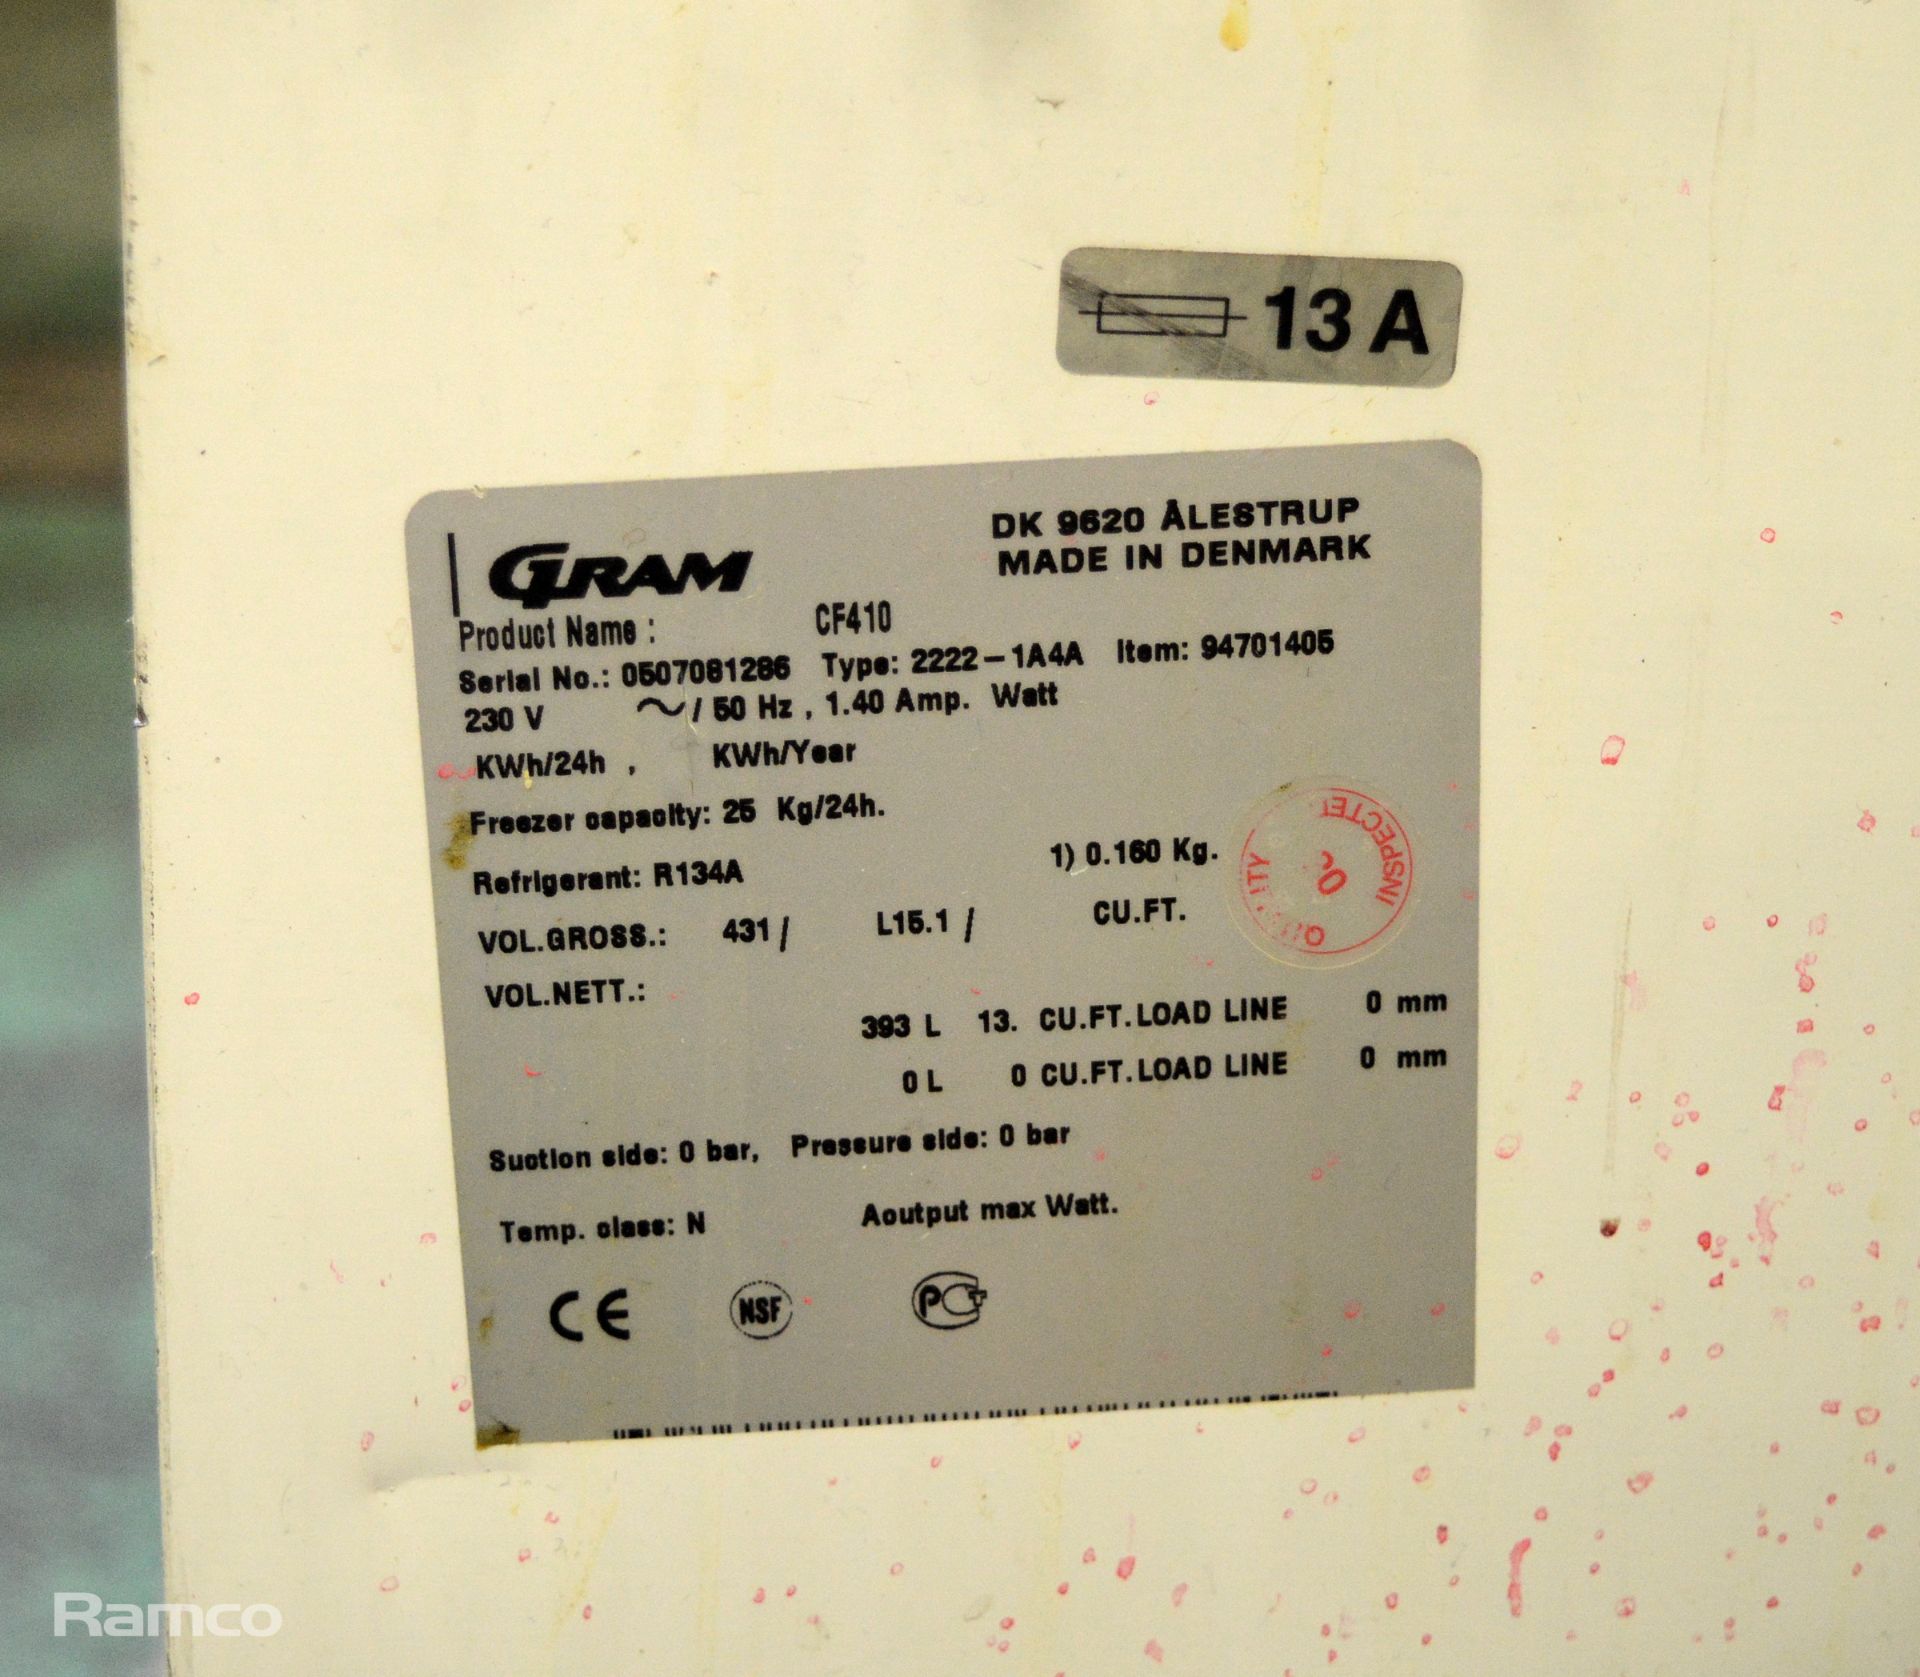 Gram CF410 chest freezer - 73x132x87cm - Image 5 of 5